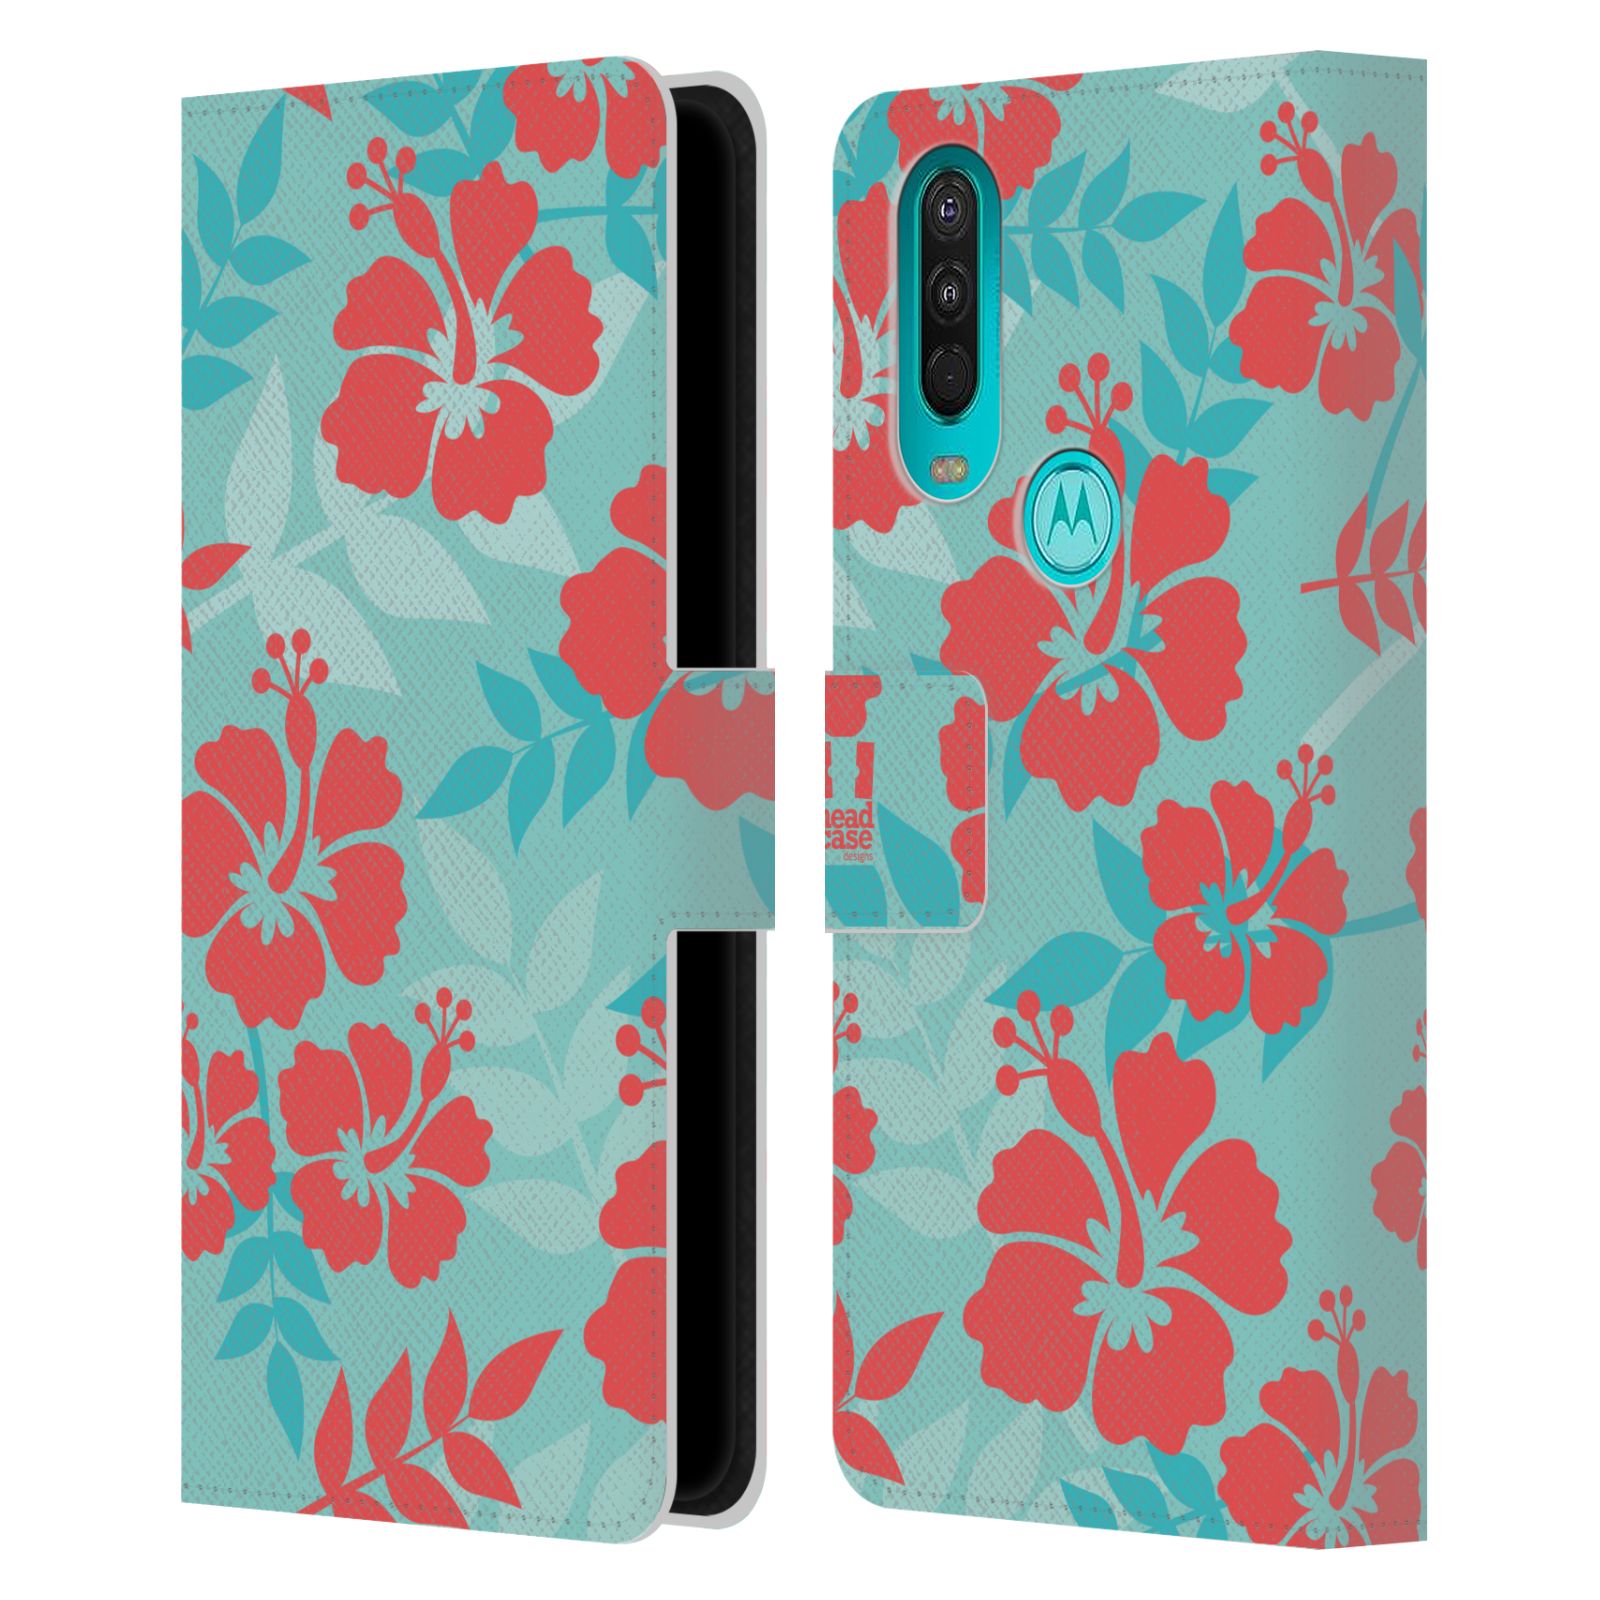 Pouzdro HEAD CASE na mobil Nokia 2.4 Havajský vzor Ibišek květ modrá a růžová